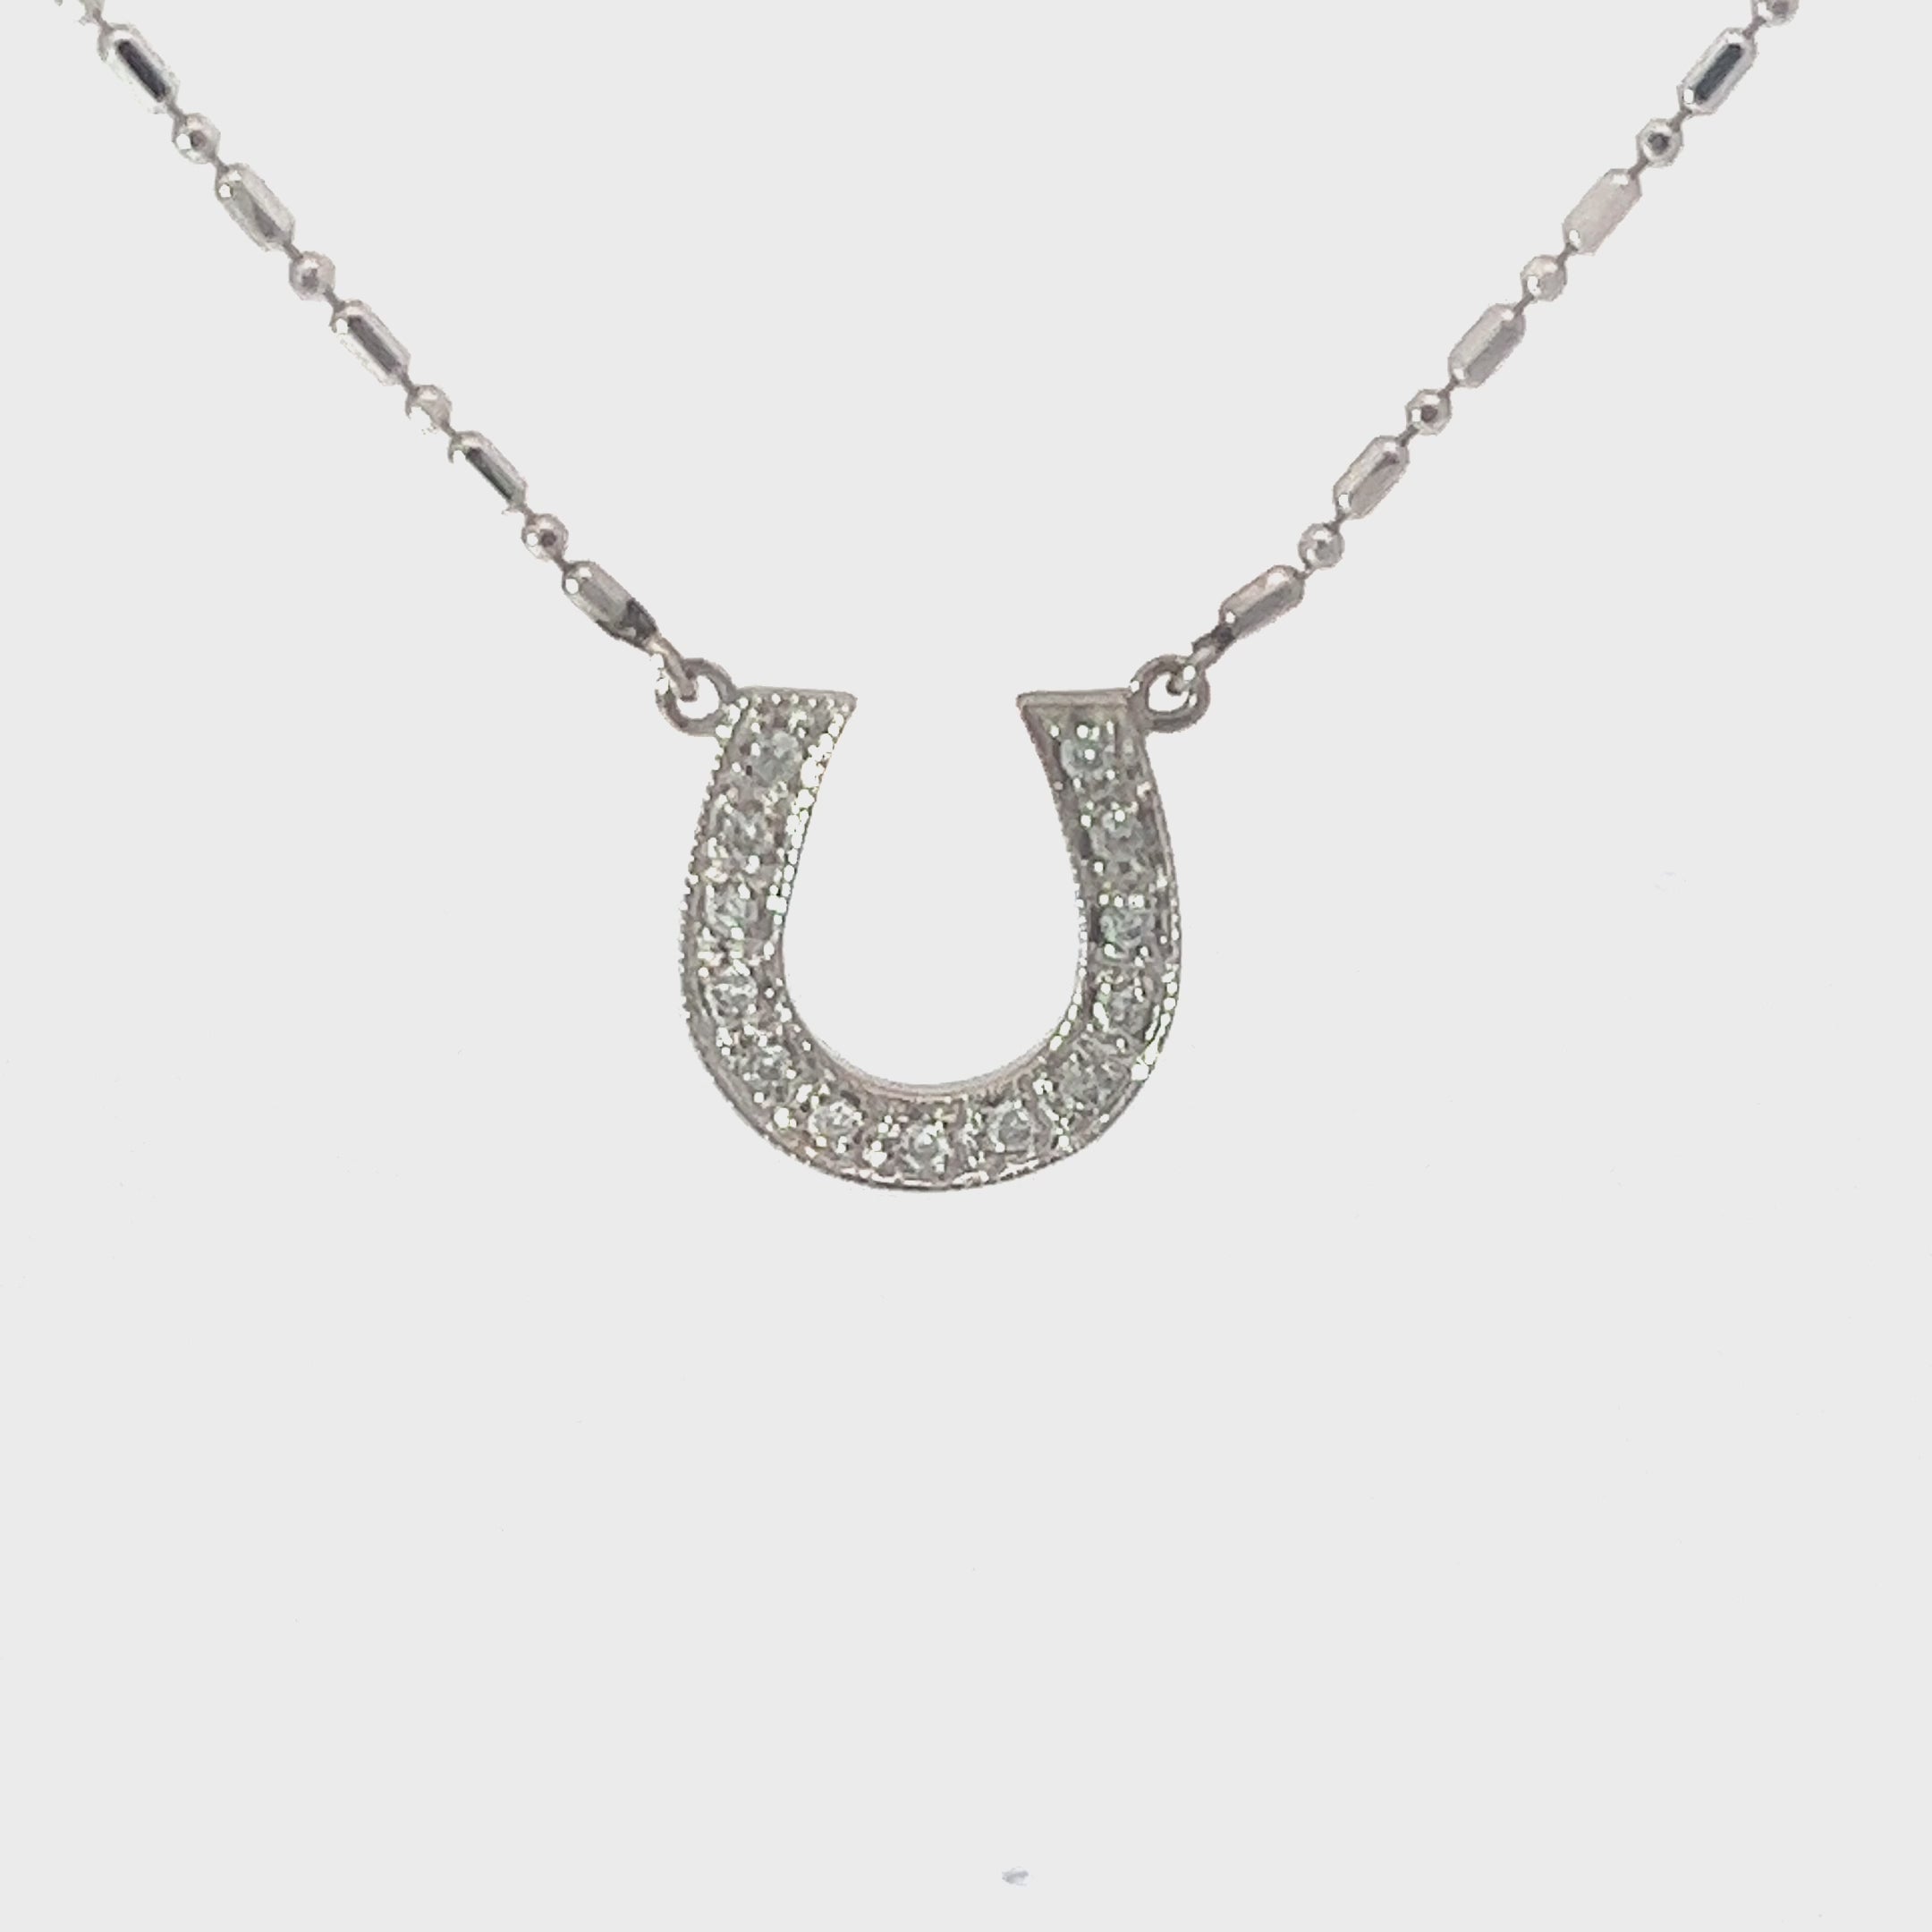 Ladies 18k white gold Diamond Horse shoe necklace